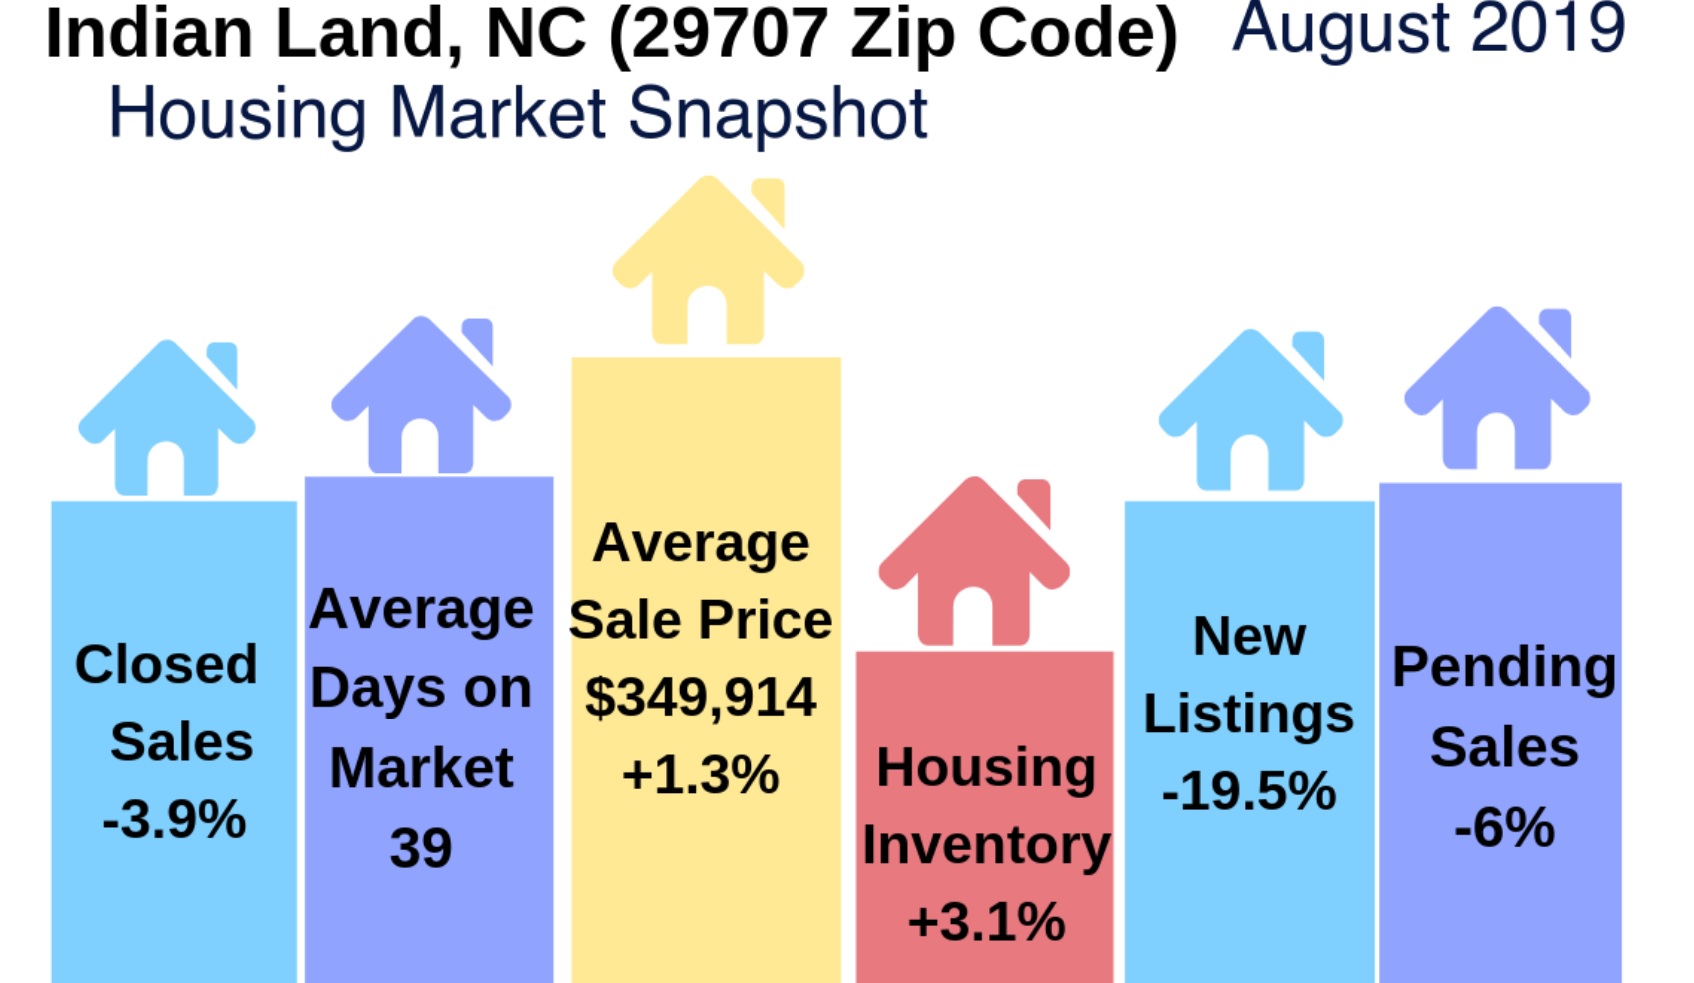 Indian Land (29707 Zip Code) Real Estate Report: August 2019